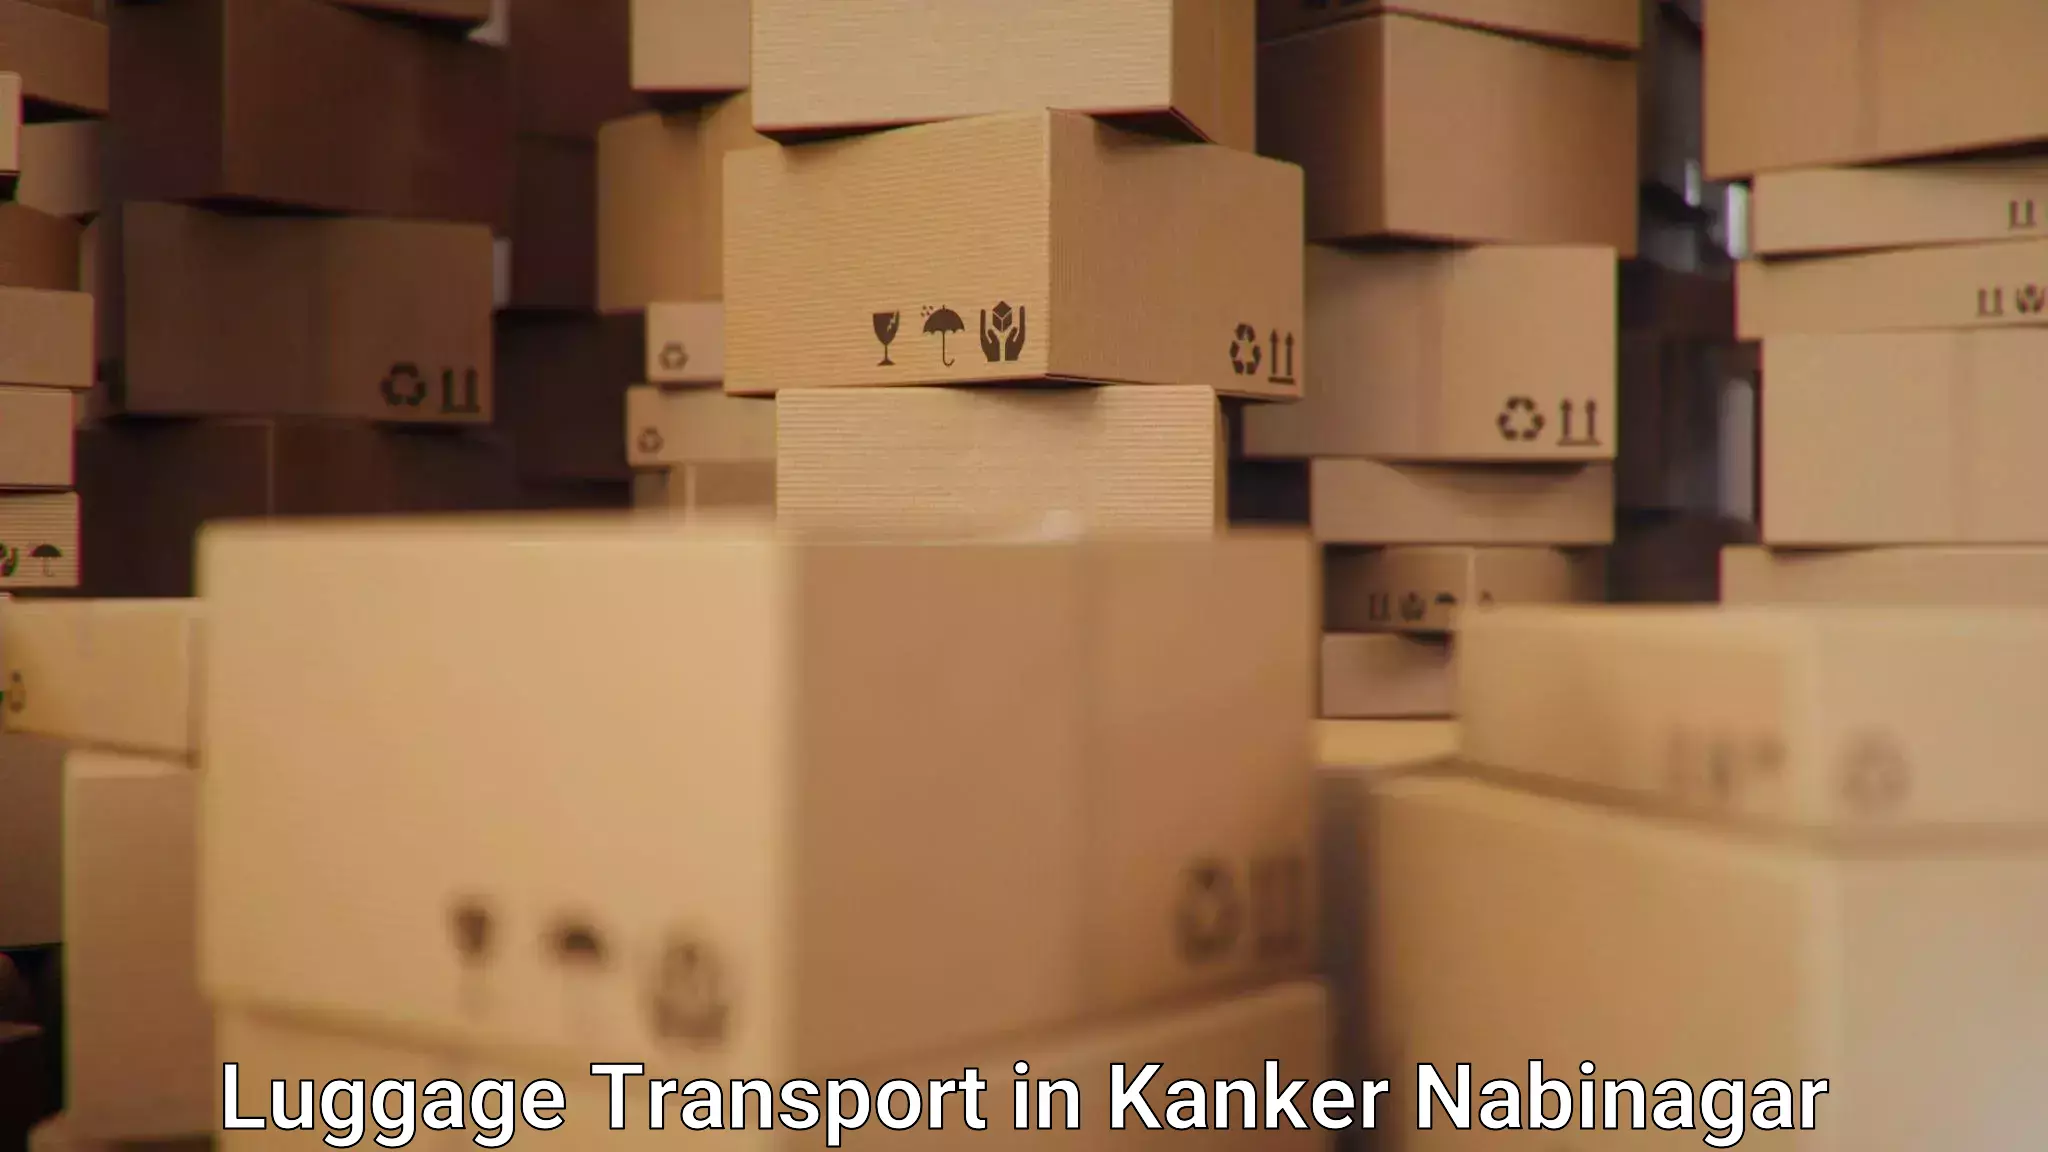 Luggage shipment specialists in Kanker Nabinagar